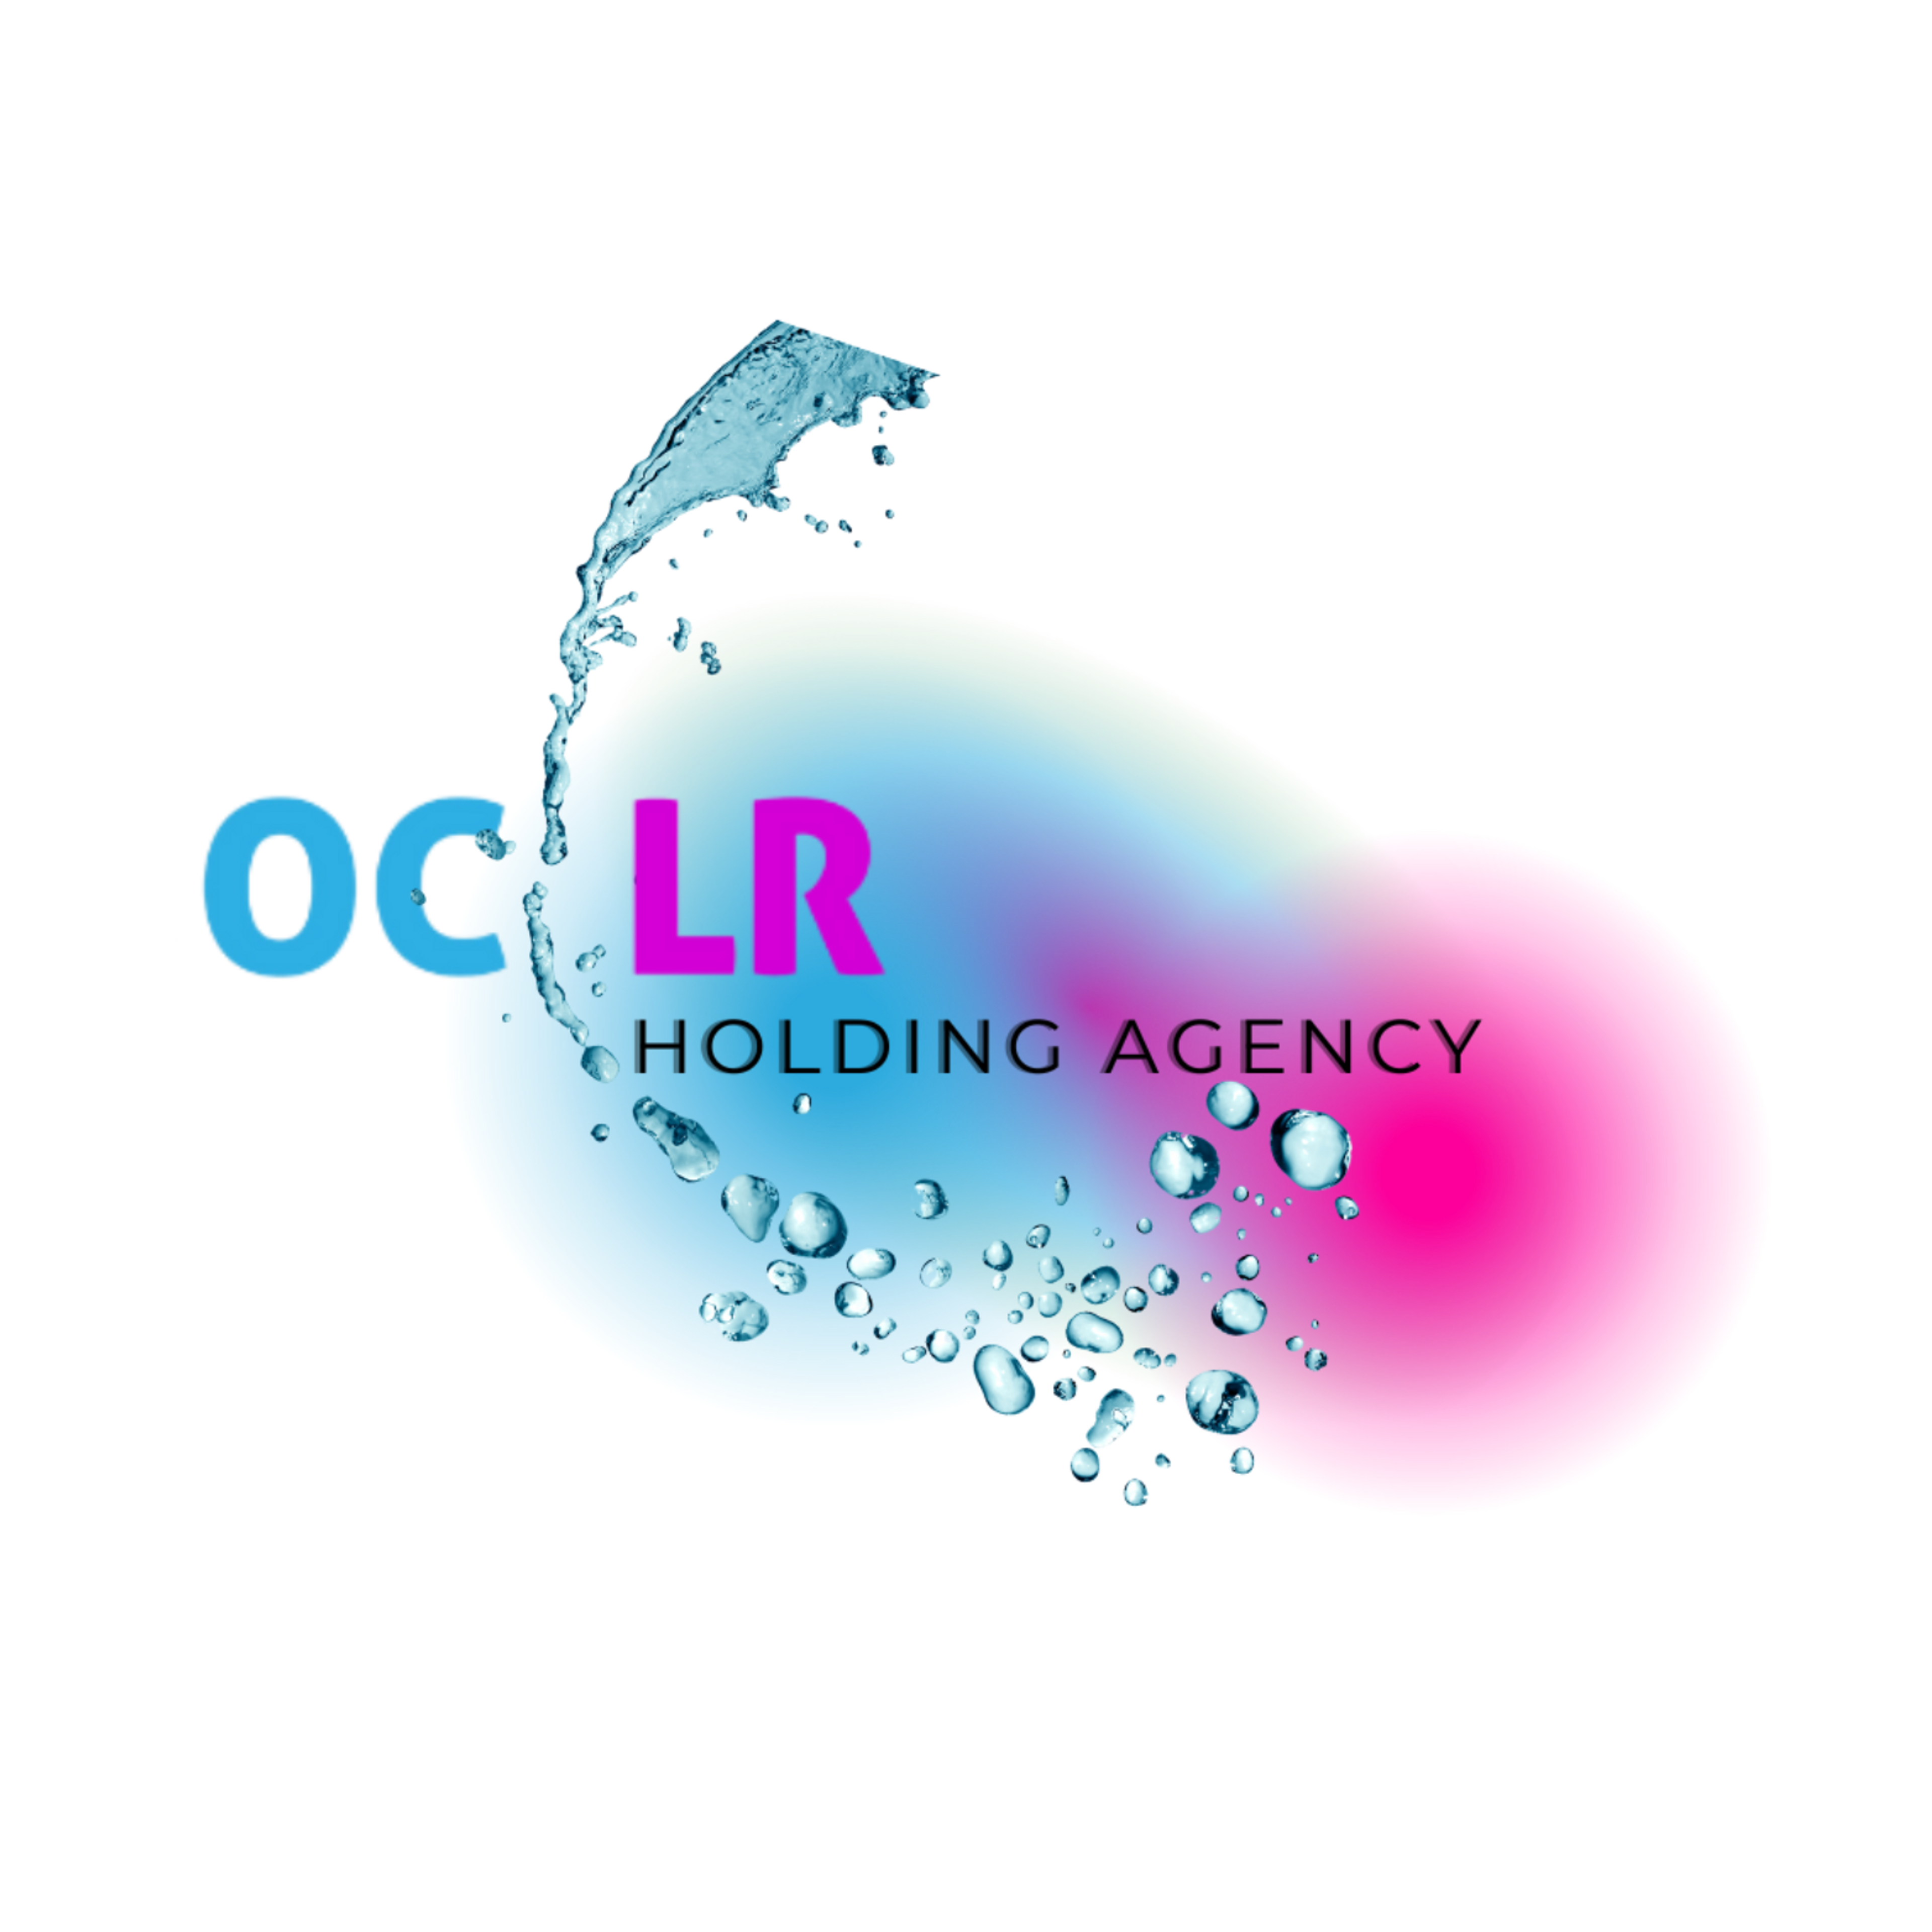 OC'LR Holding Agency